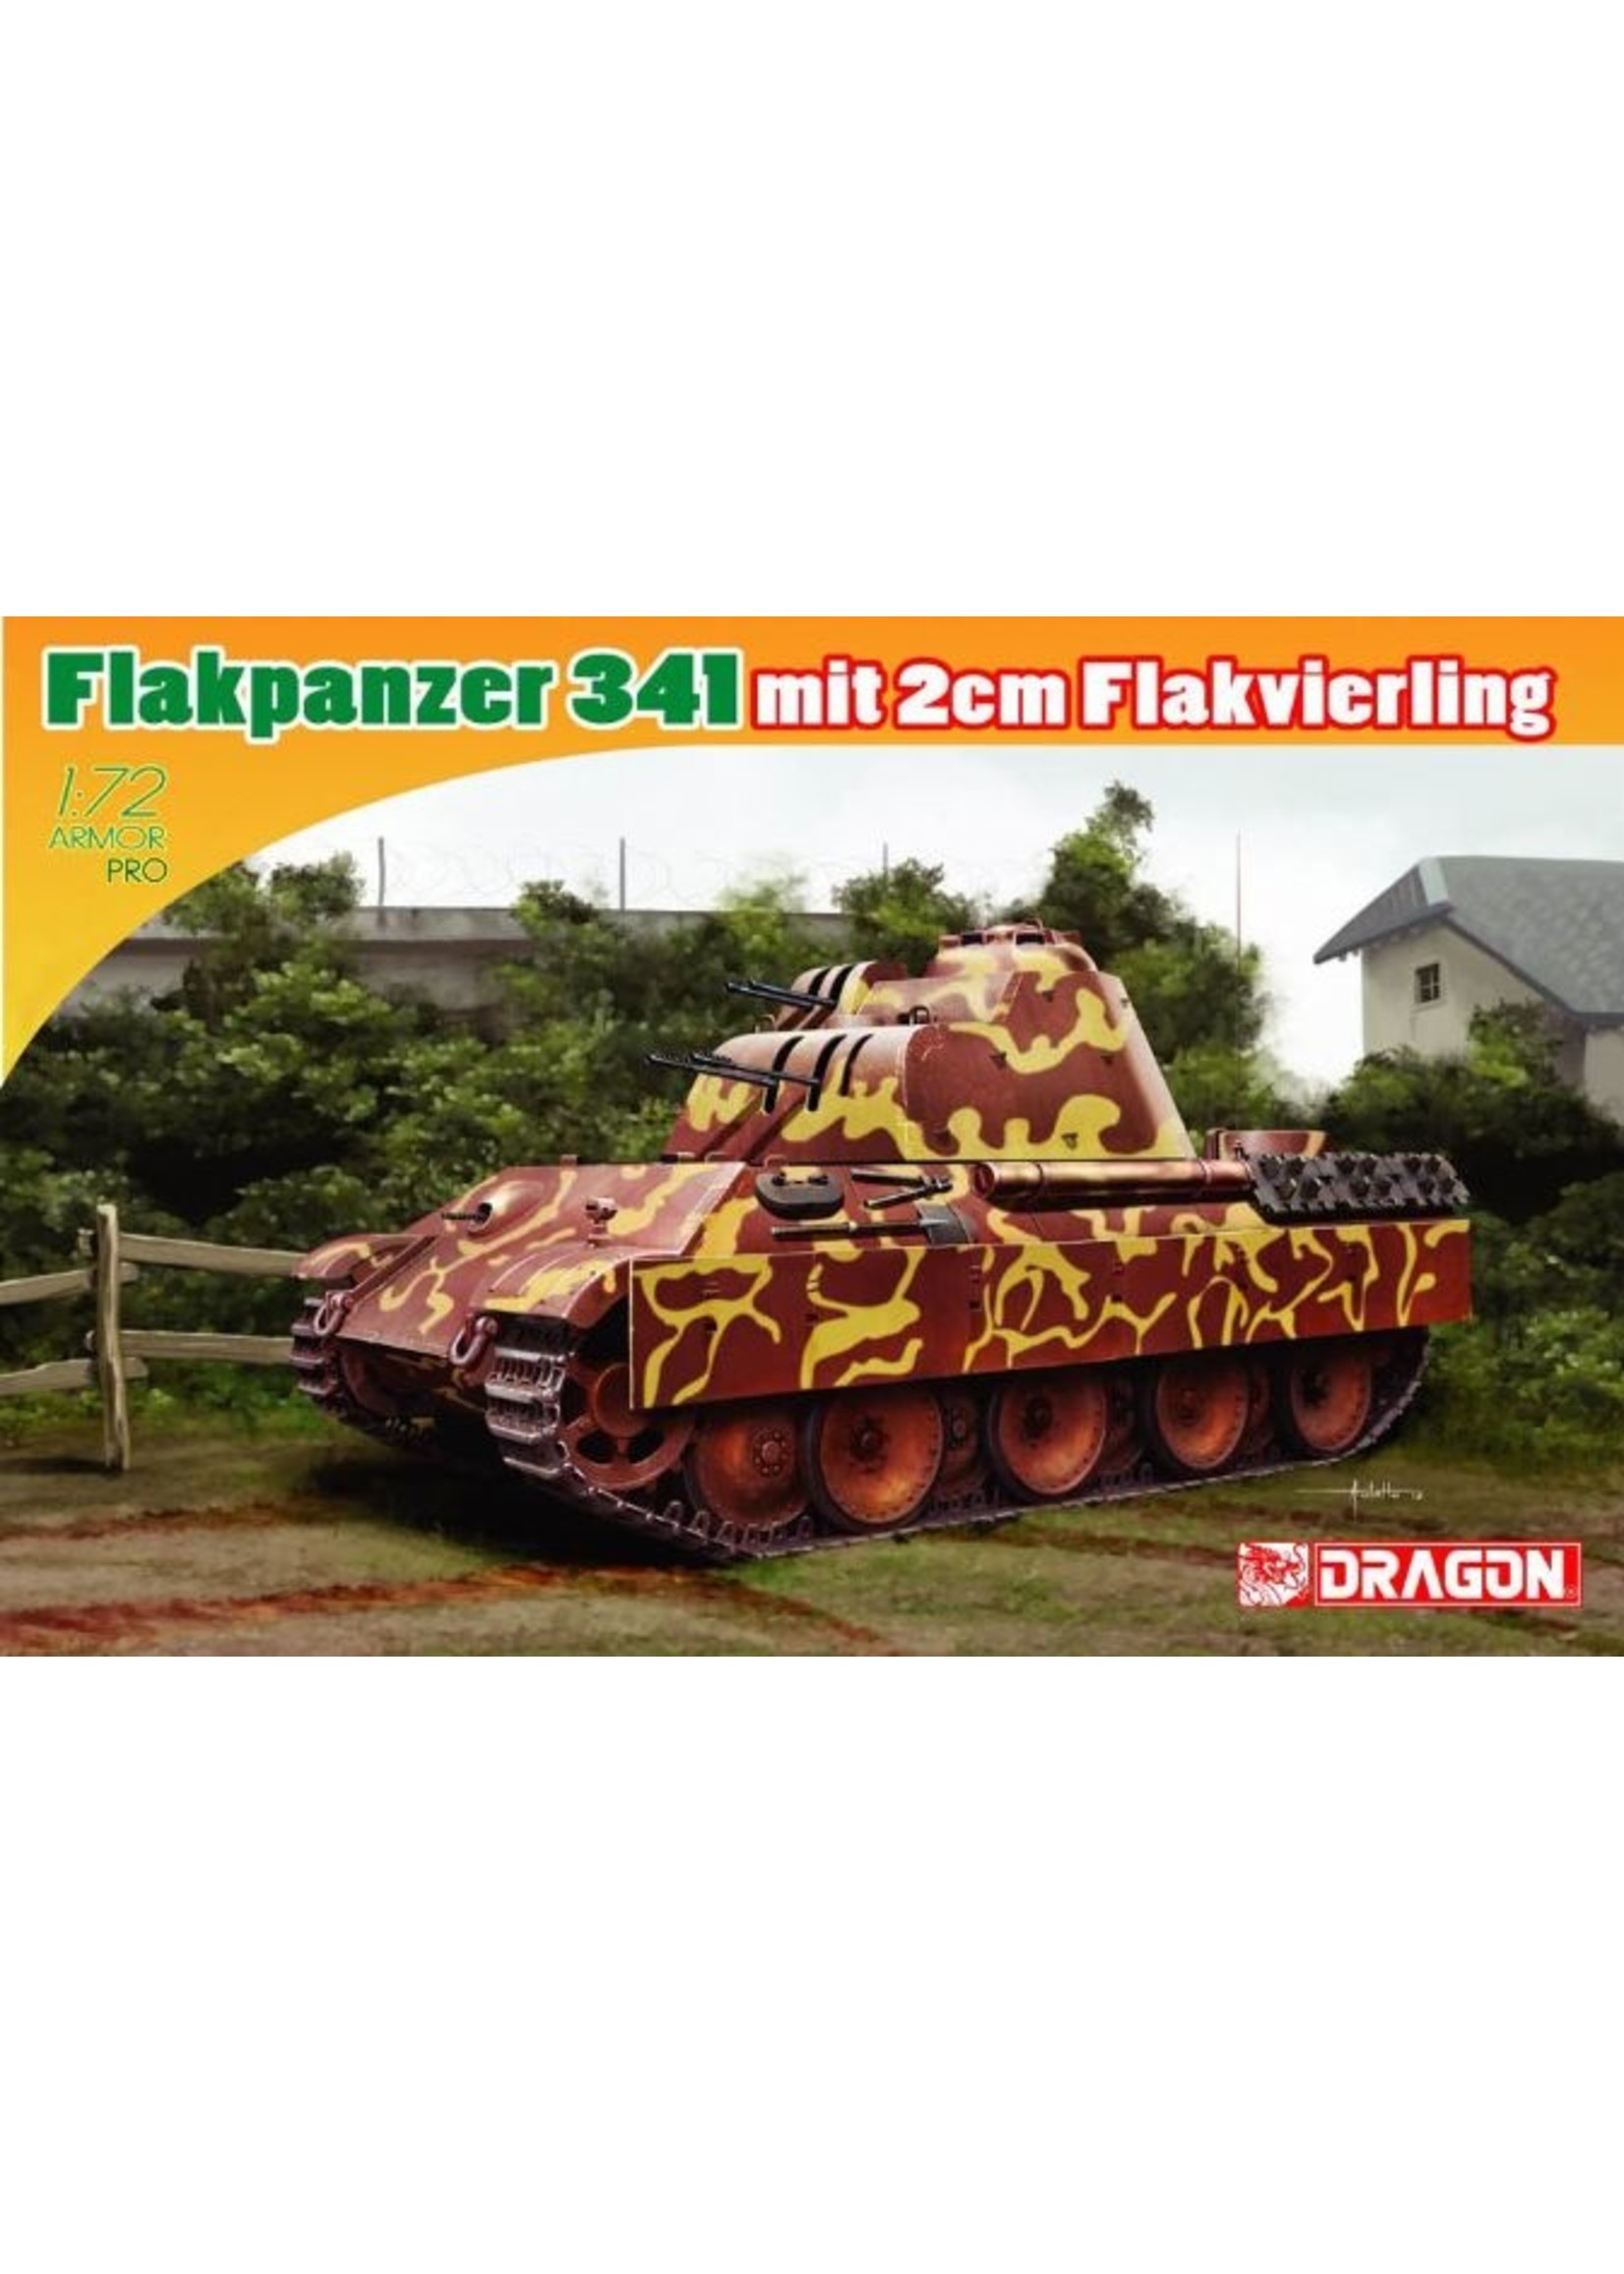 Dragon Models 7487 - 1/72 Flakpanzer 341 mit 2cm Flakvierling